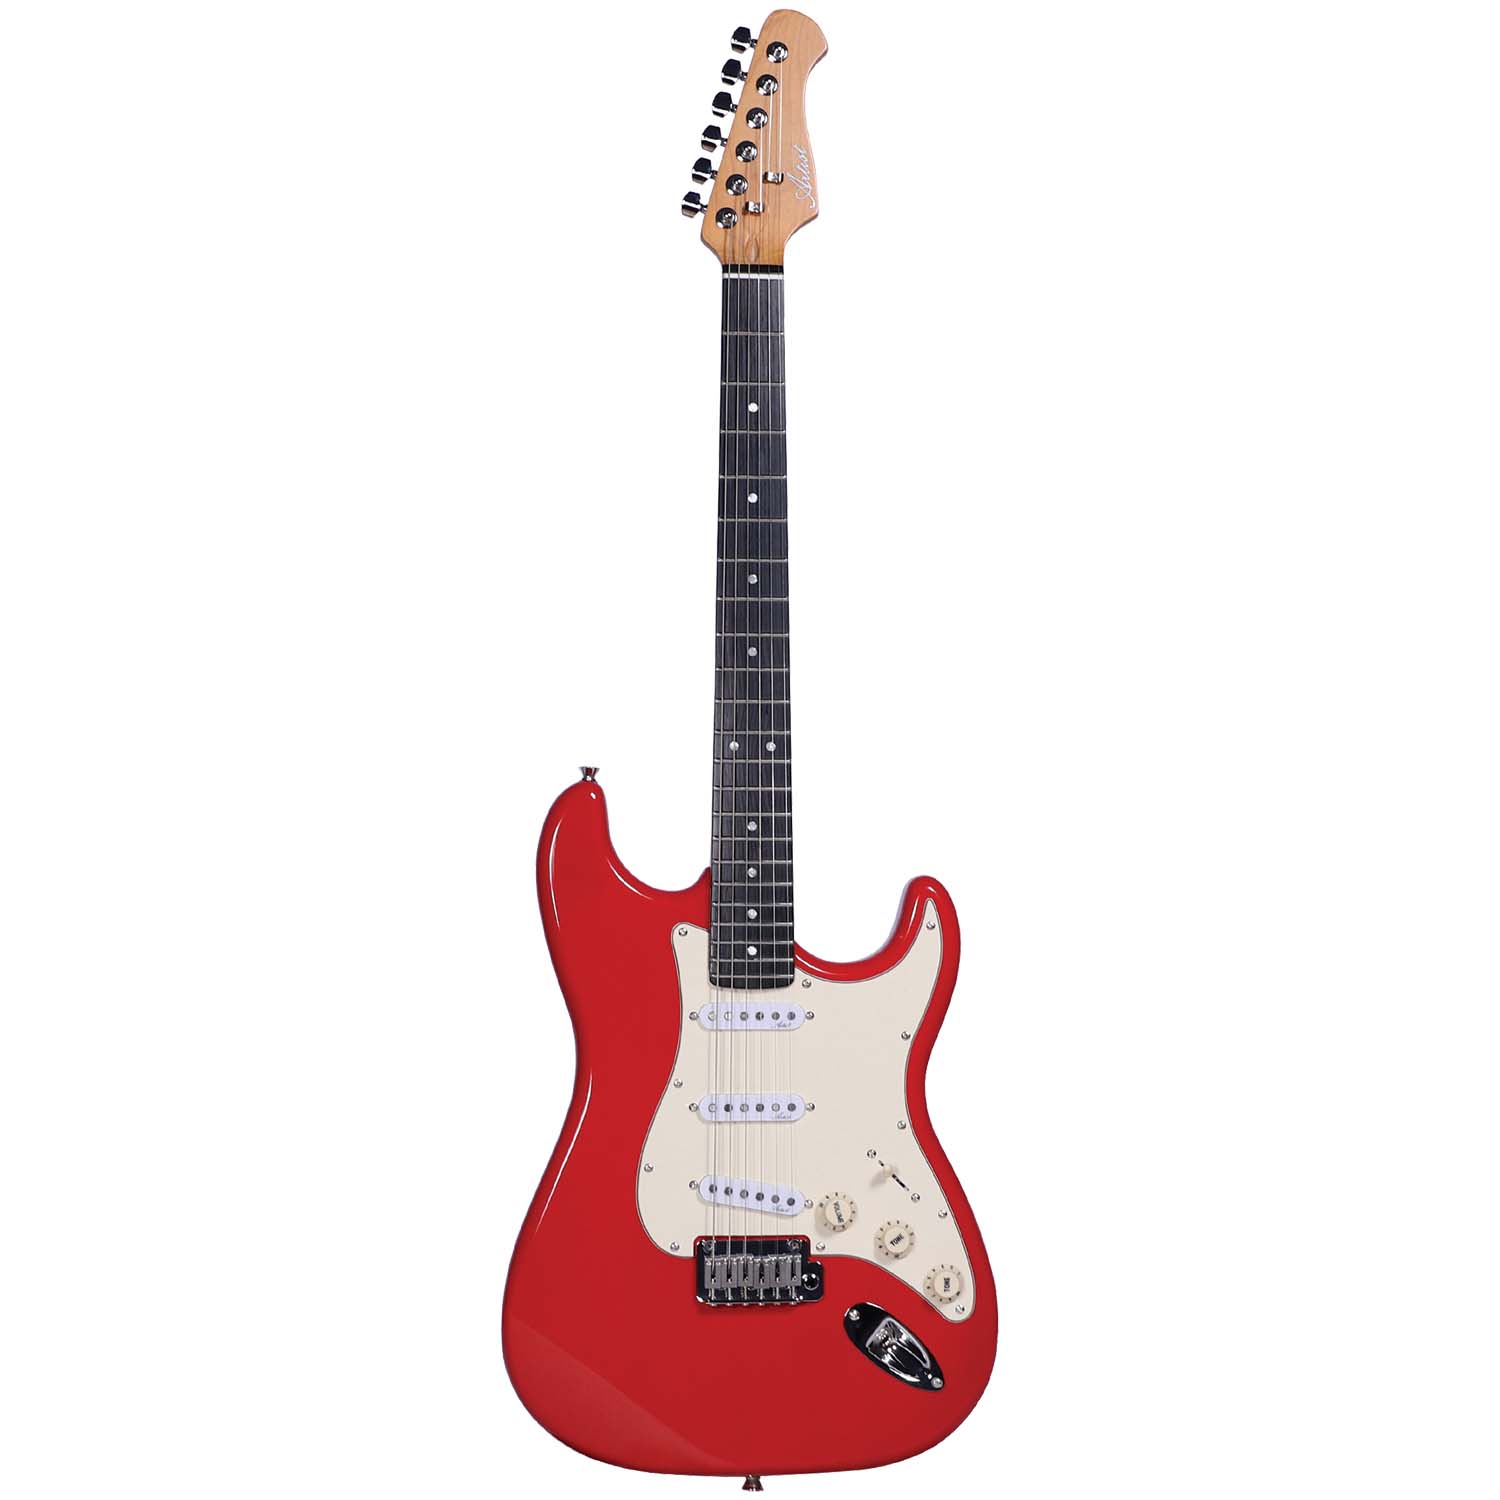 Diálogo operación solapa Artist ST62 Fiesta Red Electric Guitar w/ Single Coil Pickups